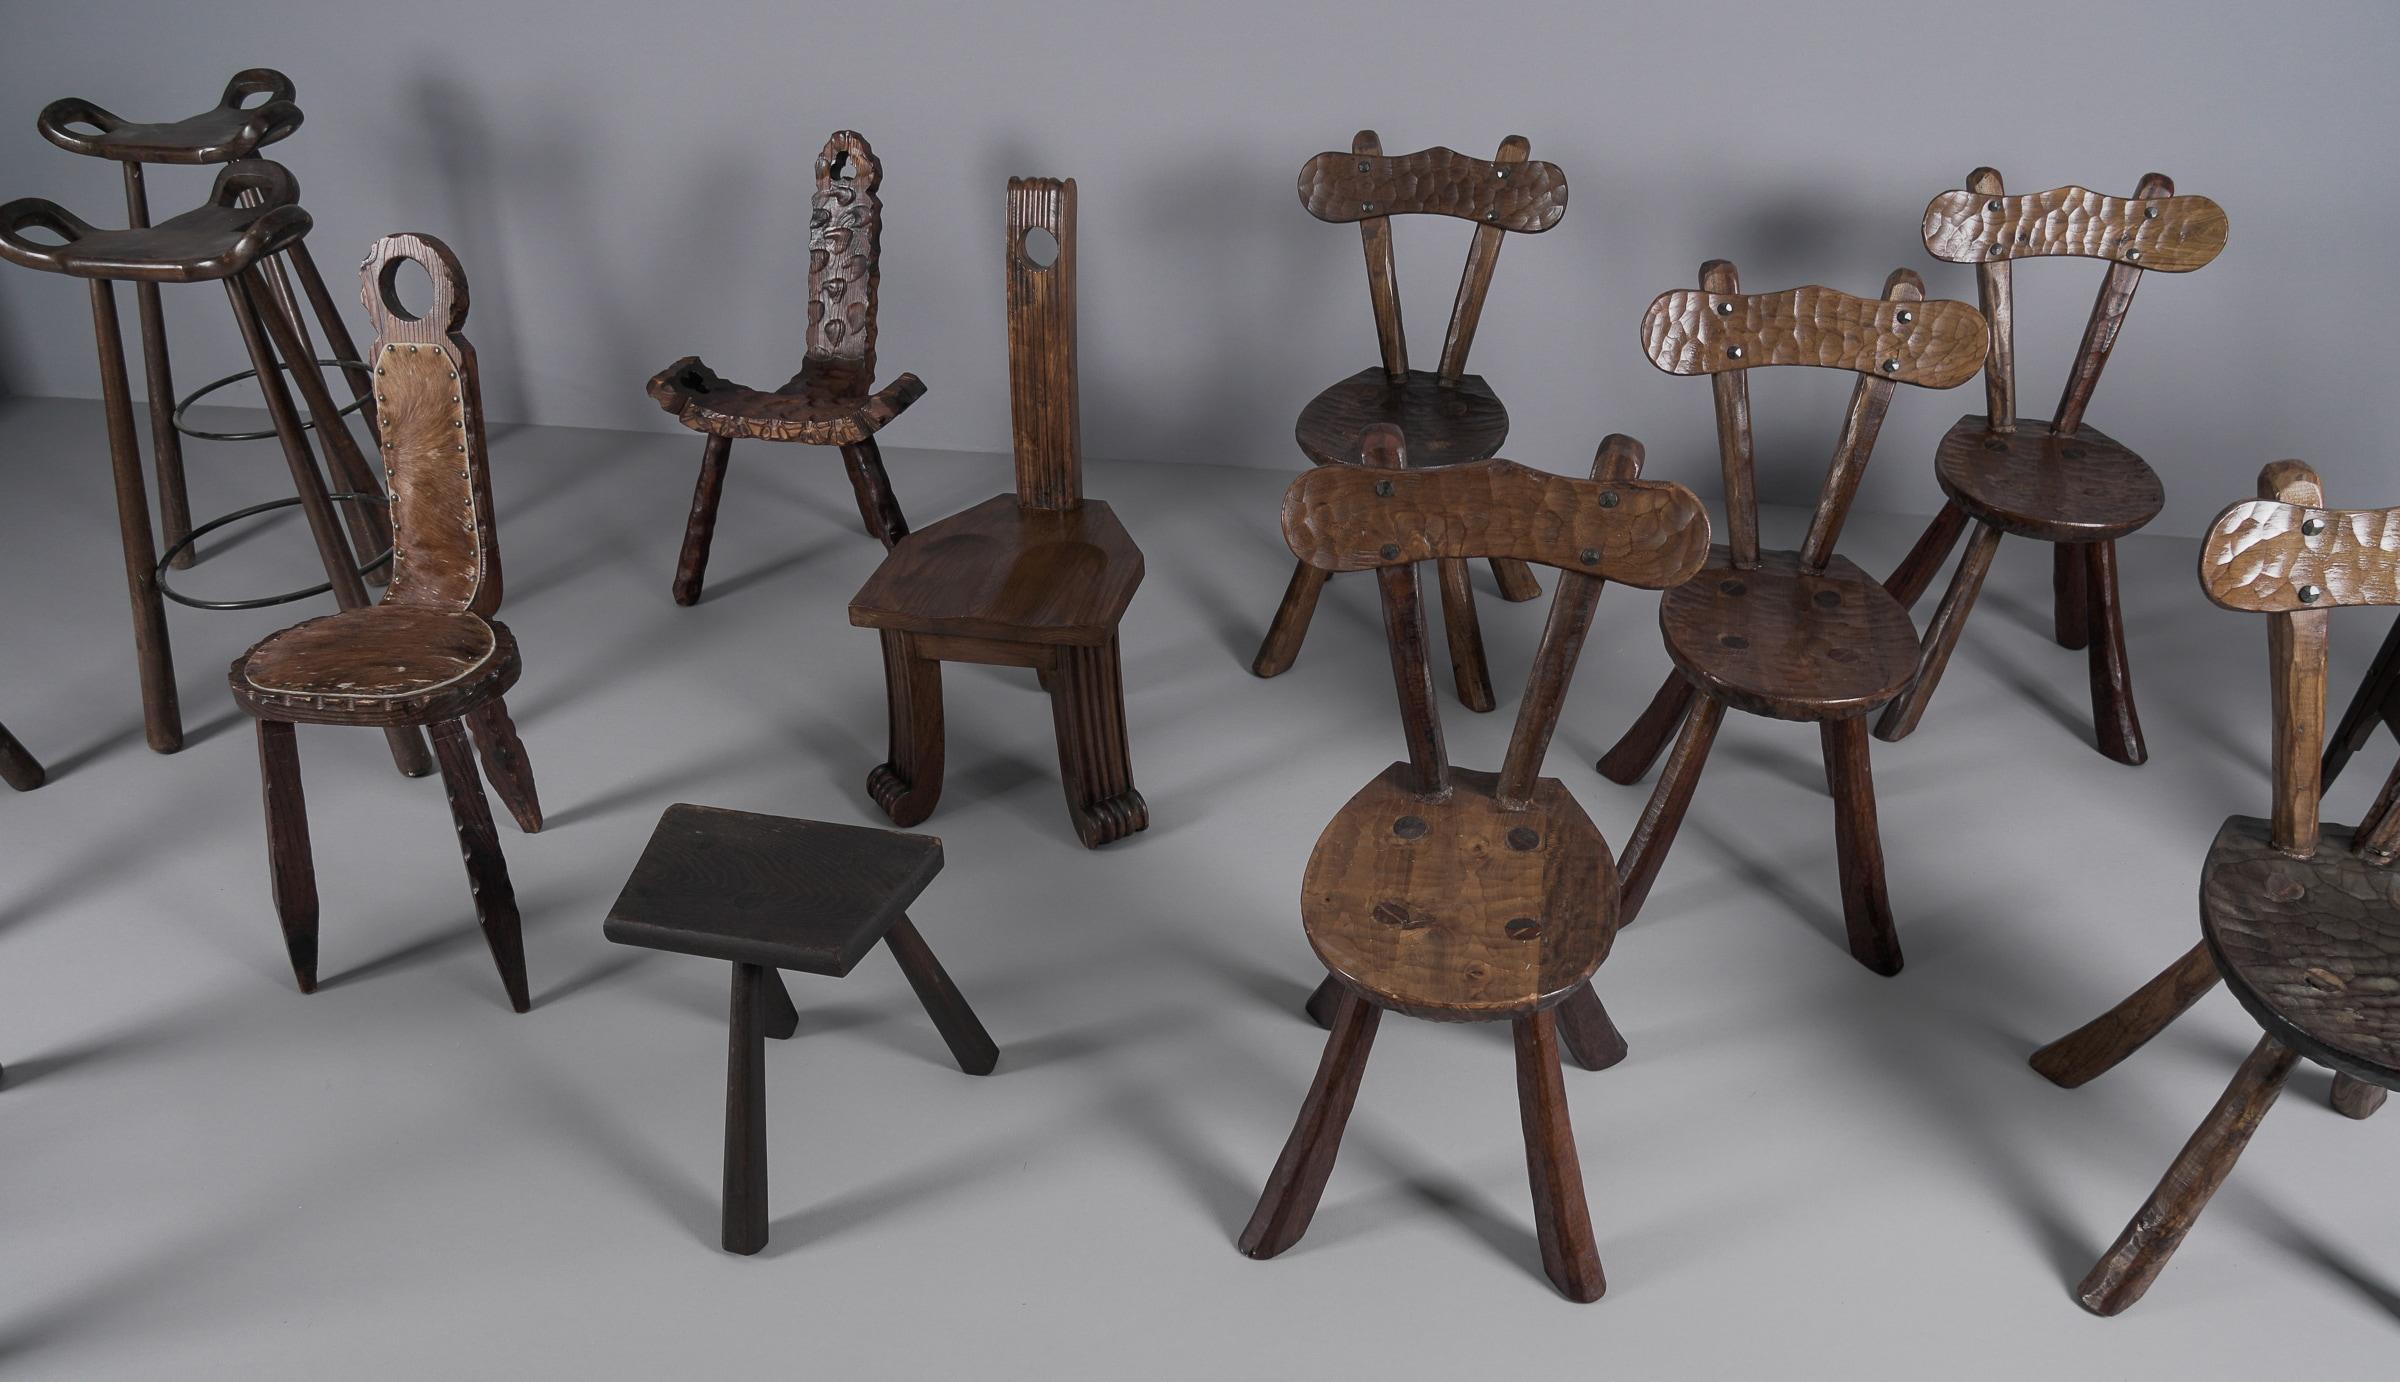 3-Legged Brutalist Rustic Modern Sculptured Chair, 1960s France For Sale 2